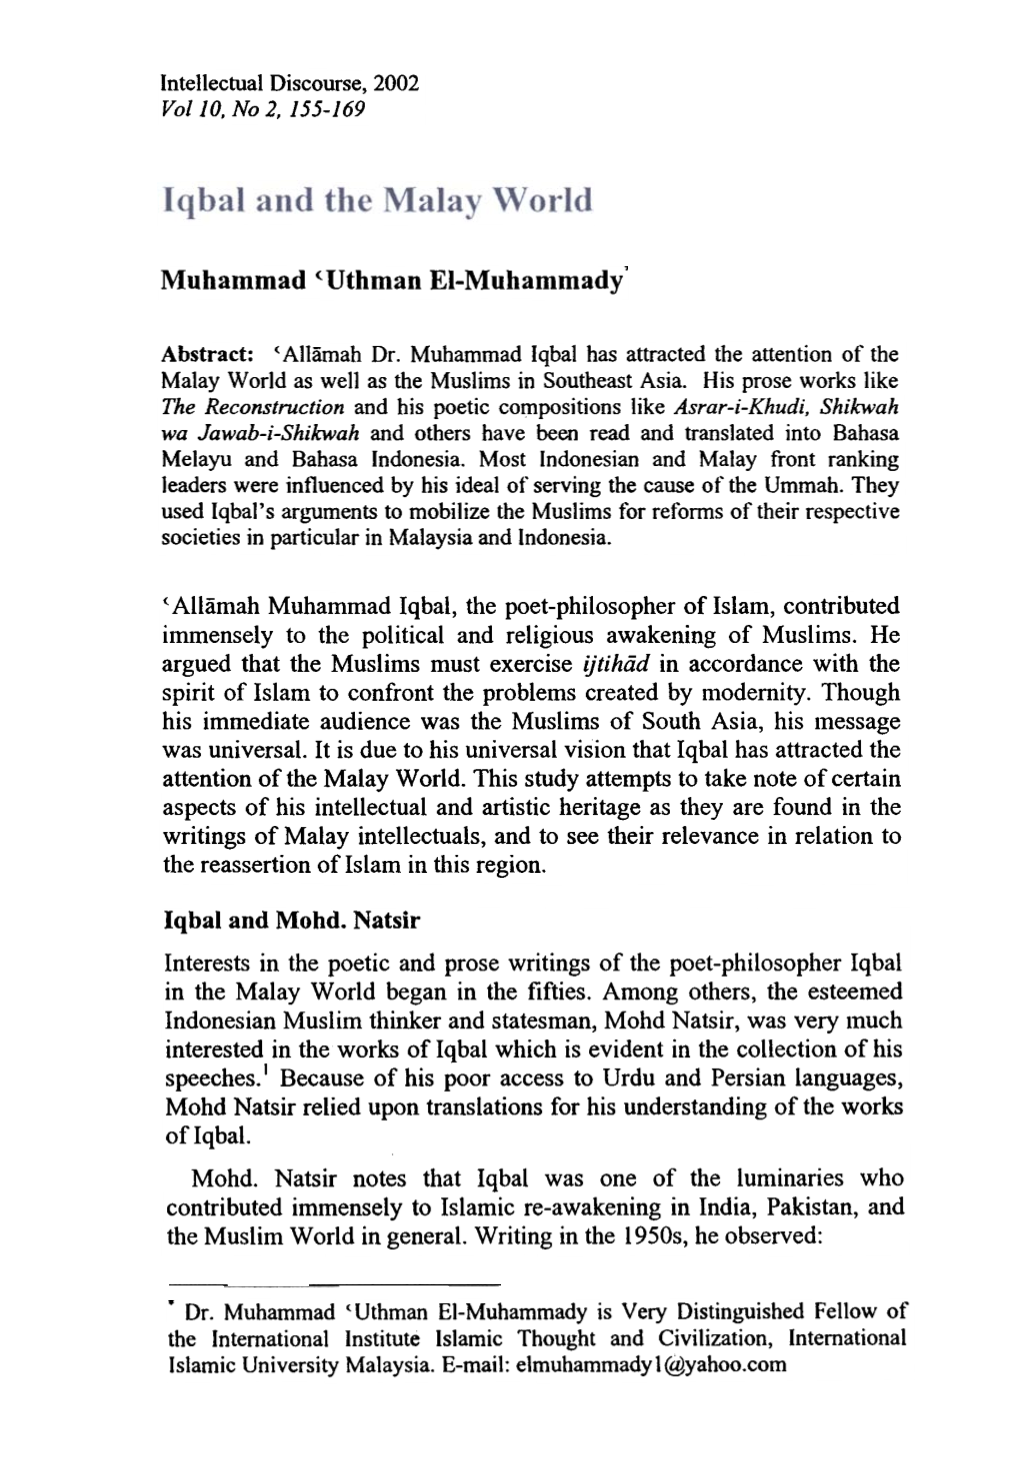 Uthman EI-Muhammady' (Allamah Muhammad Iqbal, the Poet